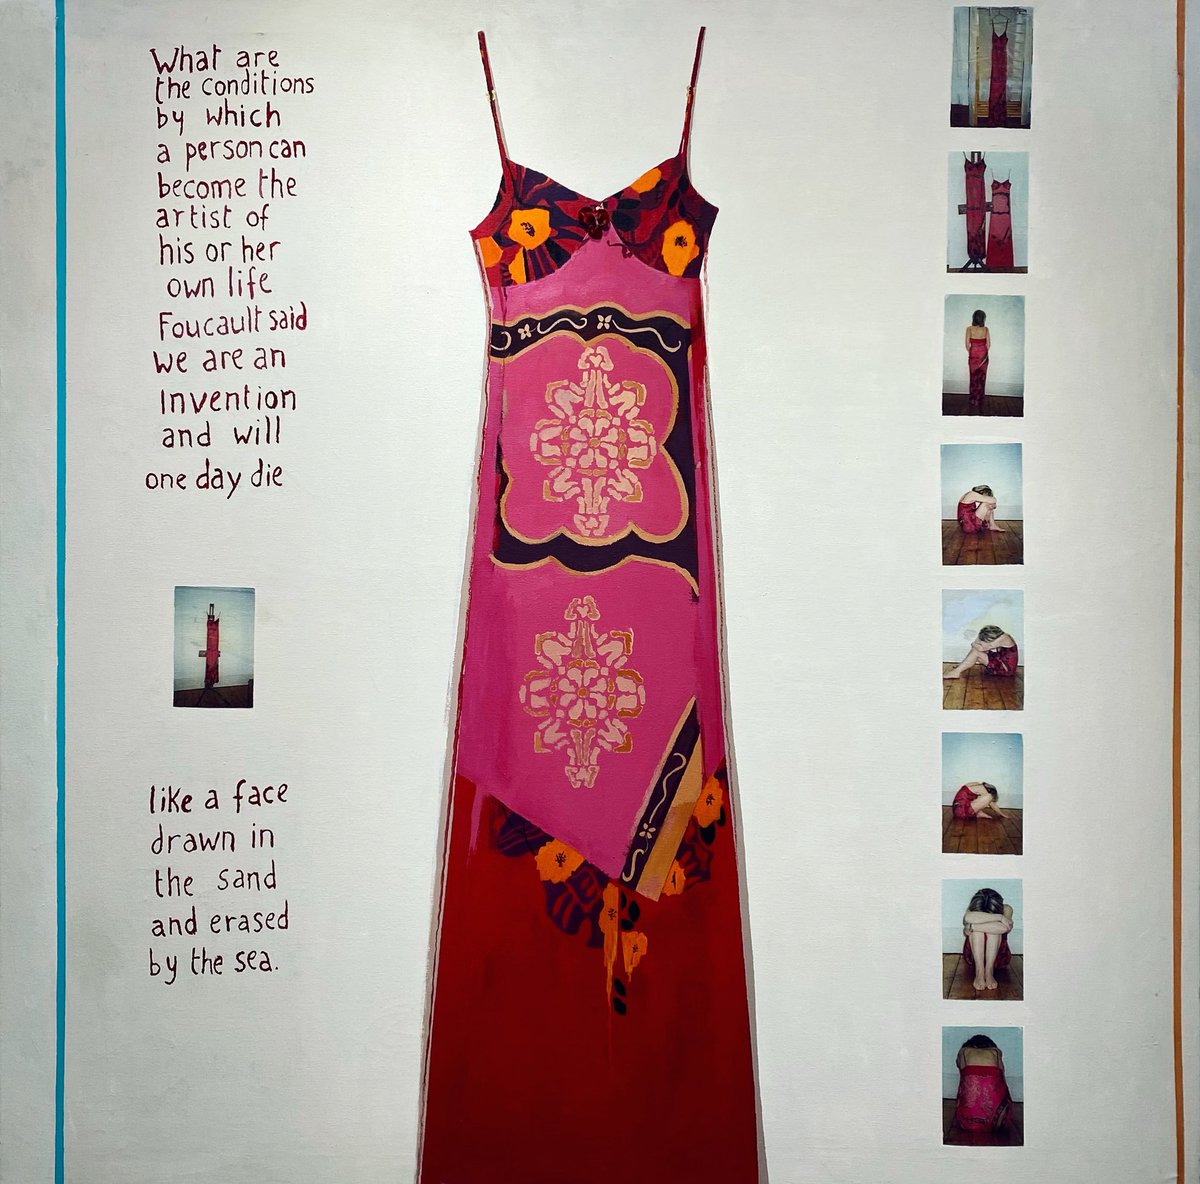 Suzan Swale ‘Red Dress’ 2003, 152 x 152 cm. On view @felixandspear 

January 2022

Felix & Spear, 71 St. Mary’s Road, London W5 5RG. Tel: 020 8566 1574

felixandspear.com

#suzanswale #reddress #felixandspear